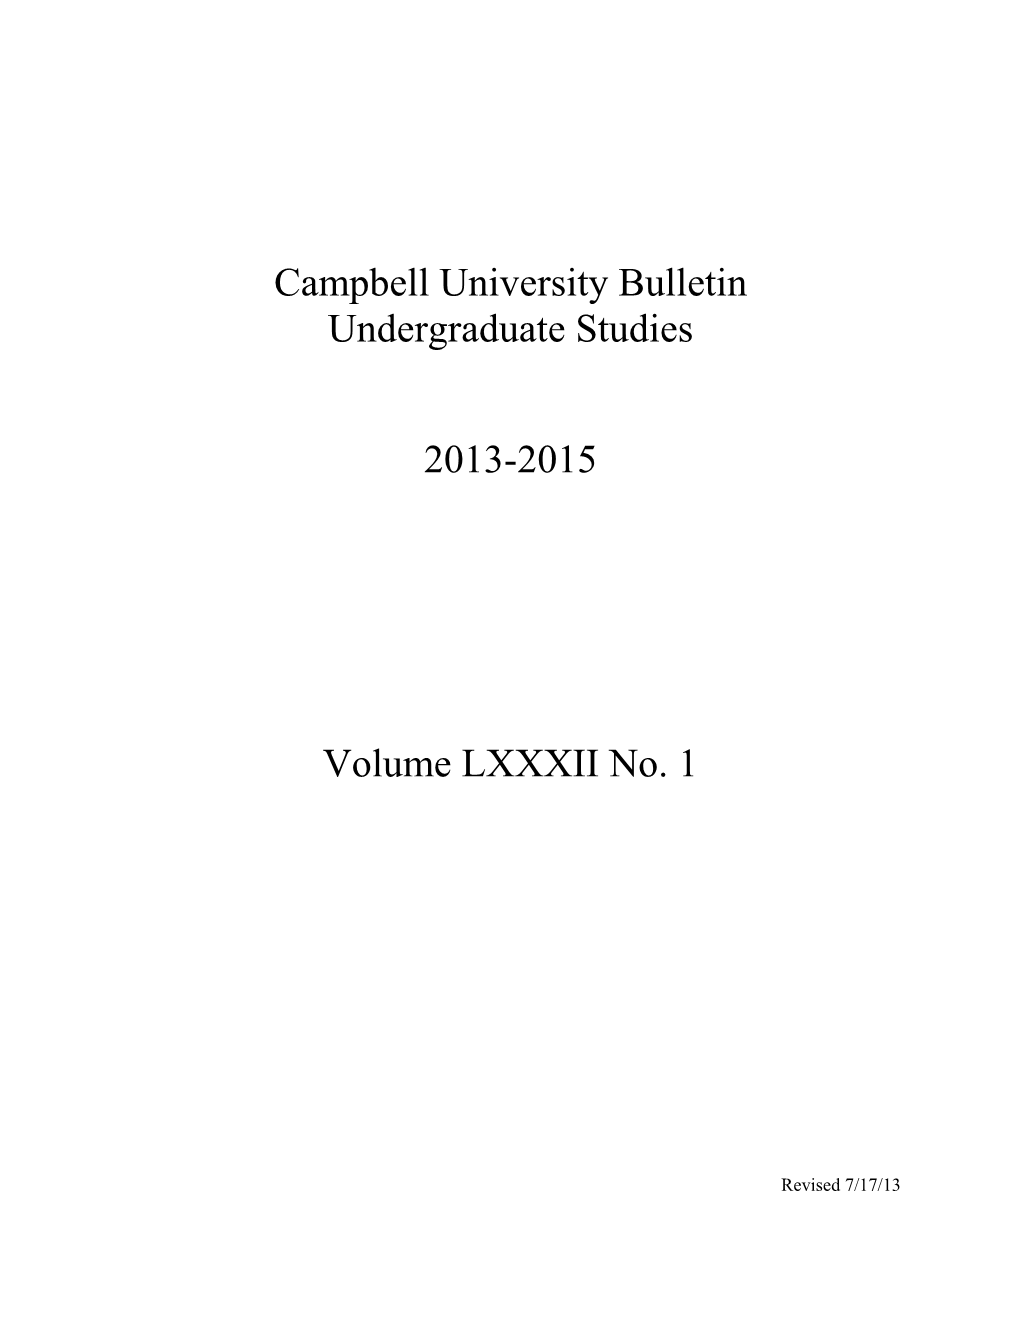 Campbell University Bulletin Undergraduate Studies 2013-2015